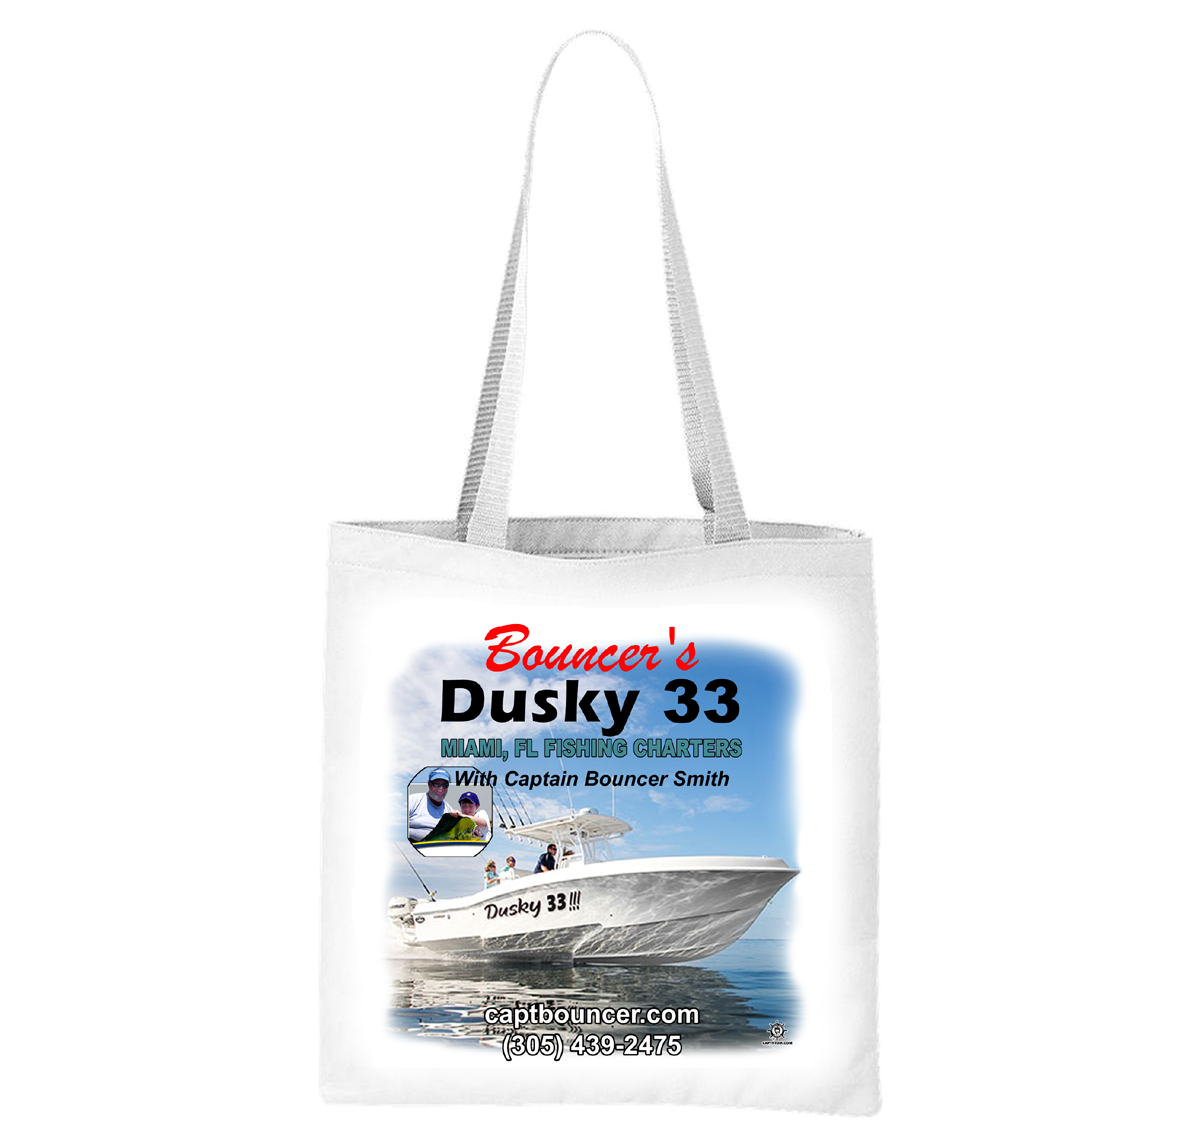 Bouncer’s Dusky 33 Fishing Charters Liberty Bag